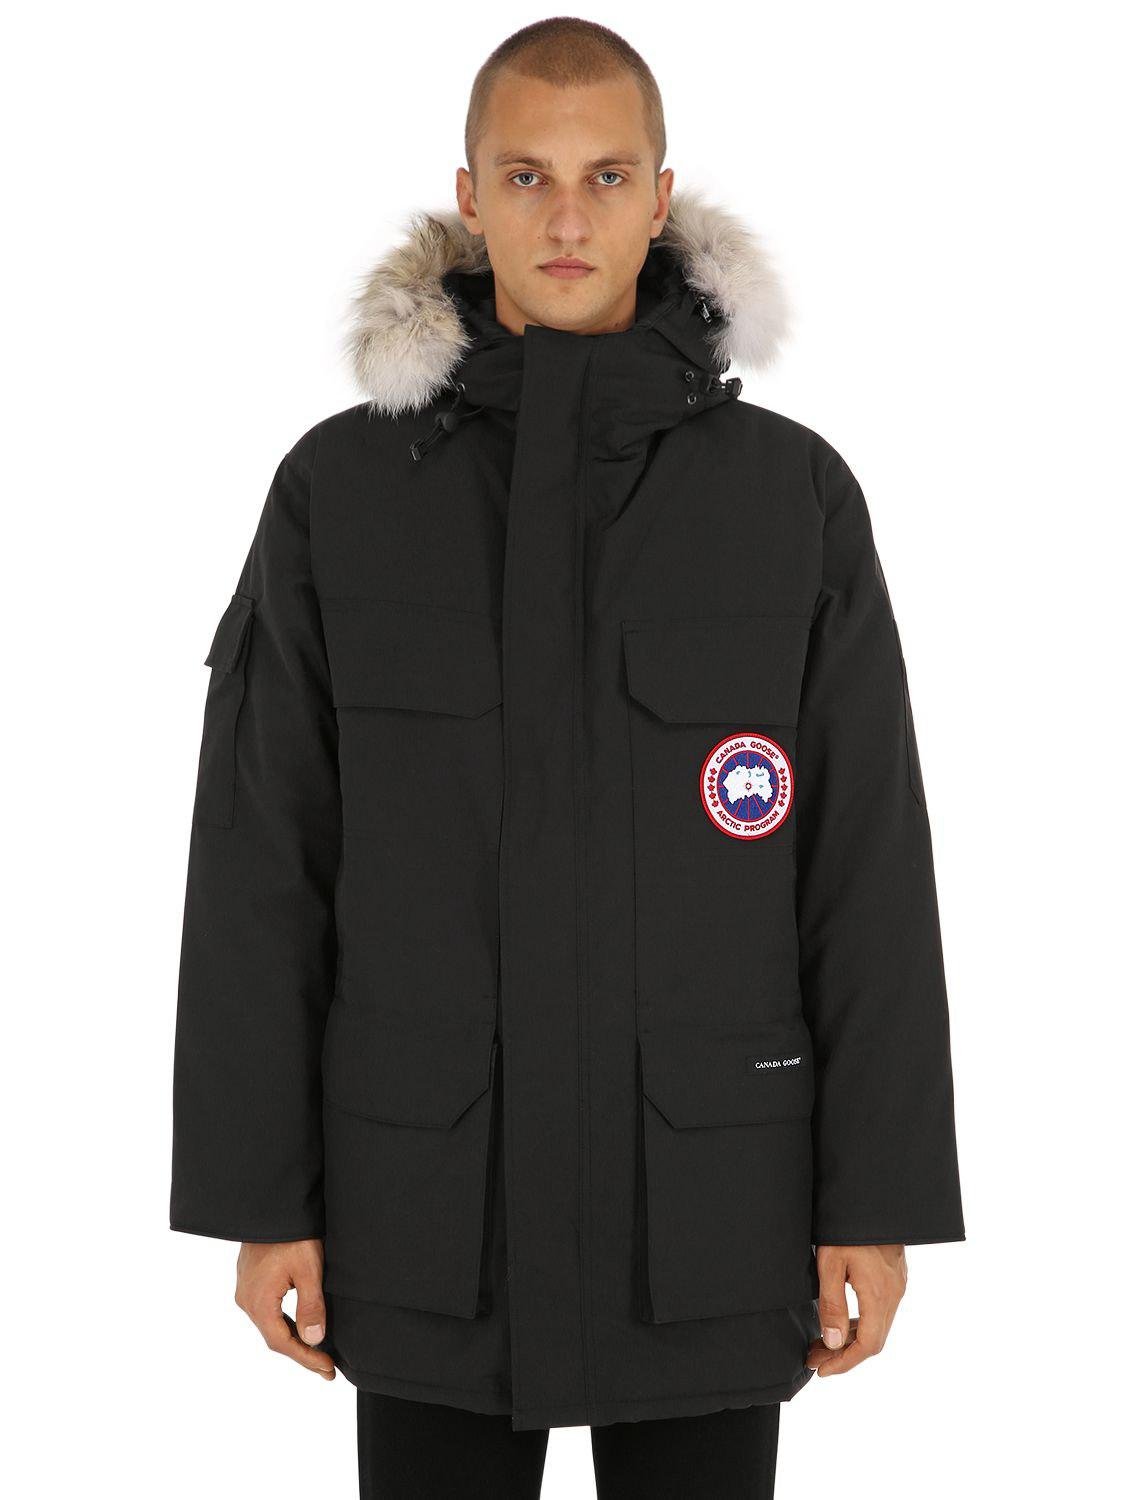 Canada Goose Expedition Fur Trim Parka in Black for Men - Lyst